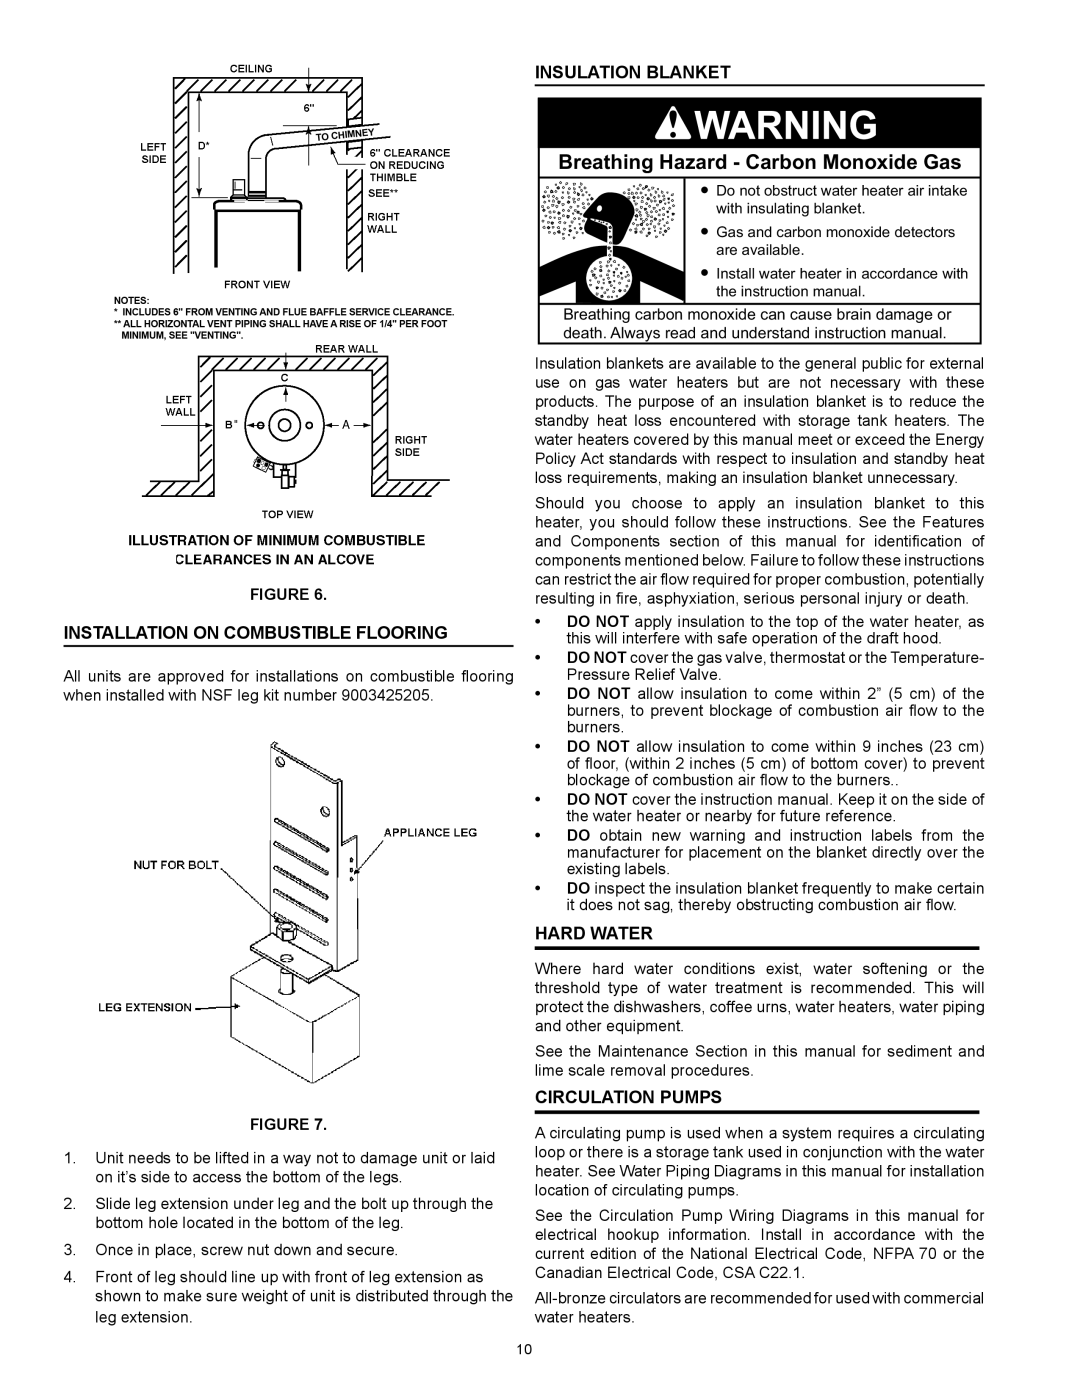 Reliance Water Heaters N85390NE Breathing Hazard - Carbon Monoxide Gas, installation on combustible flooring, Hard Water 